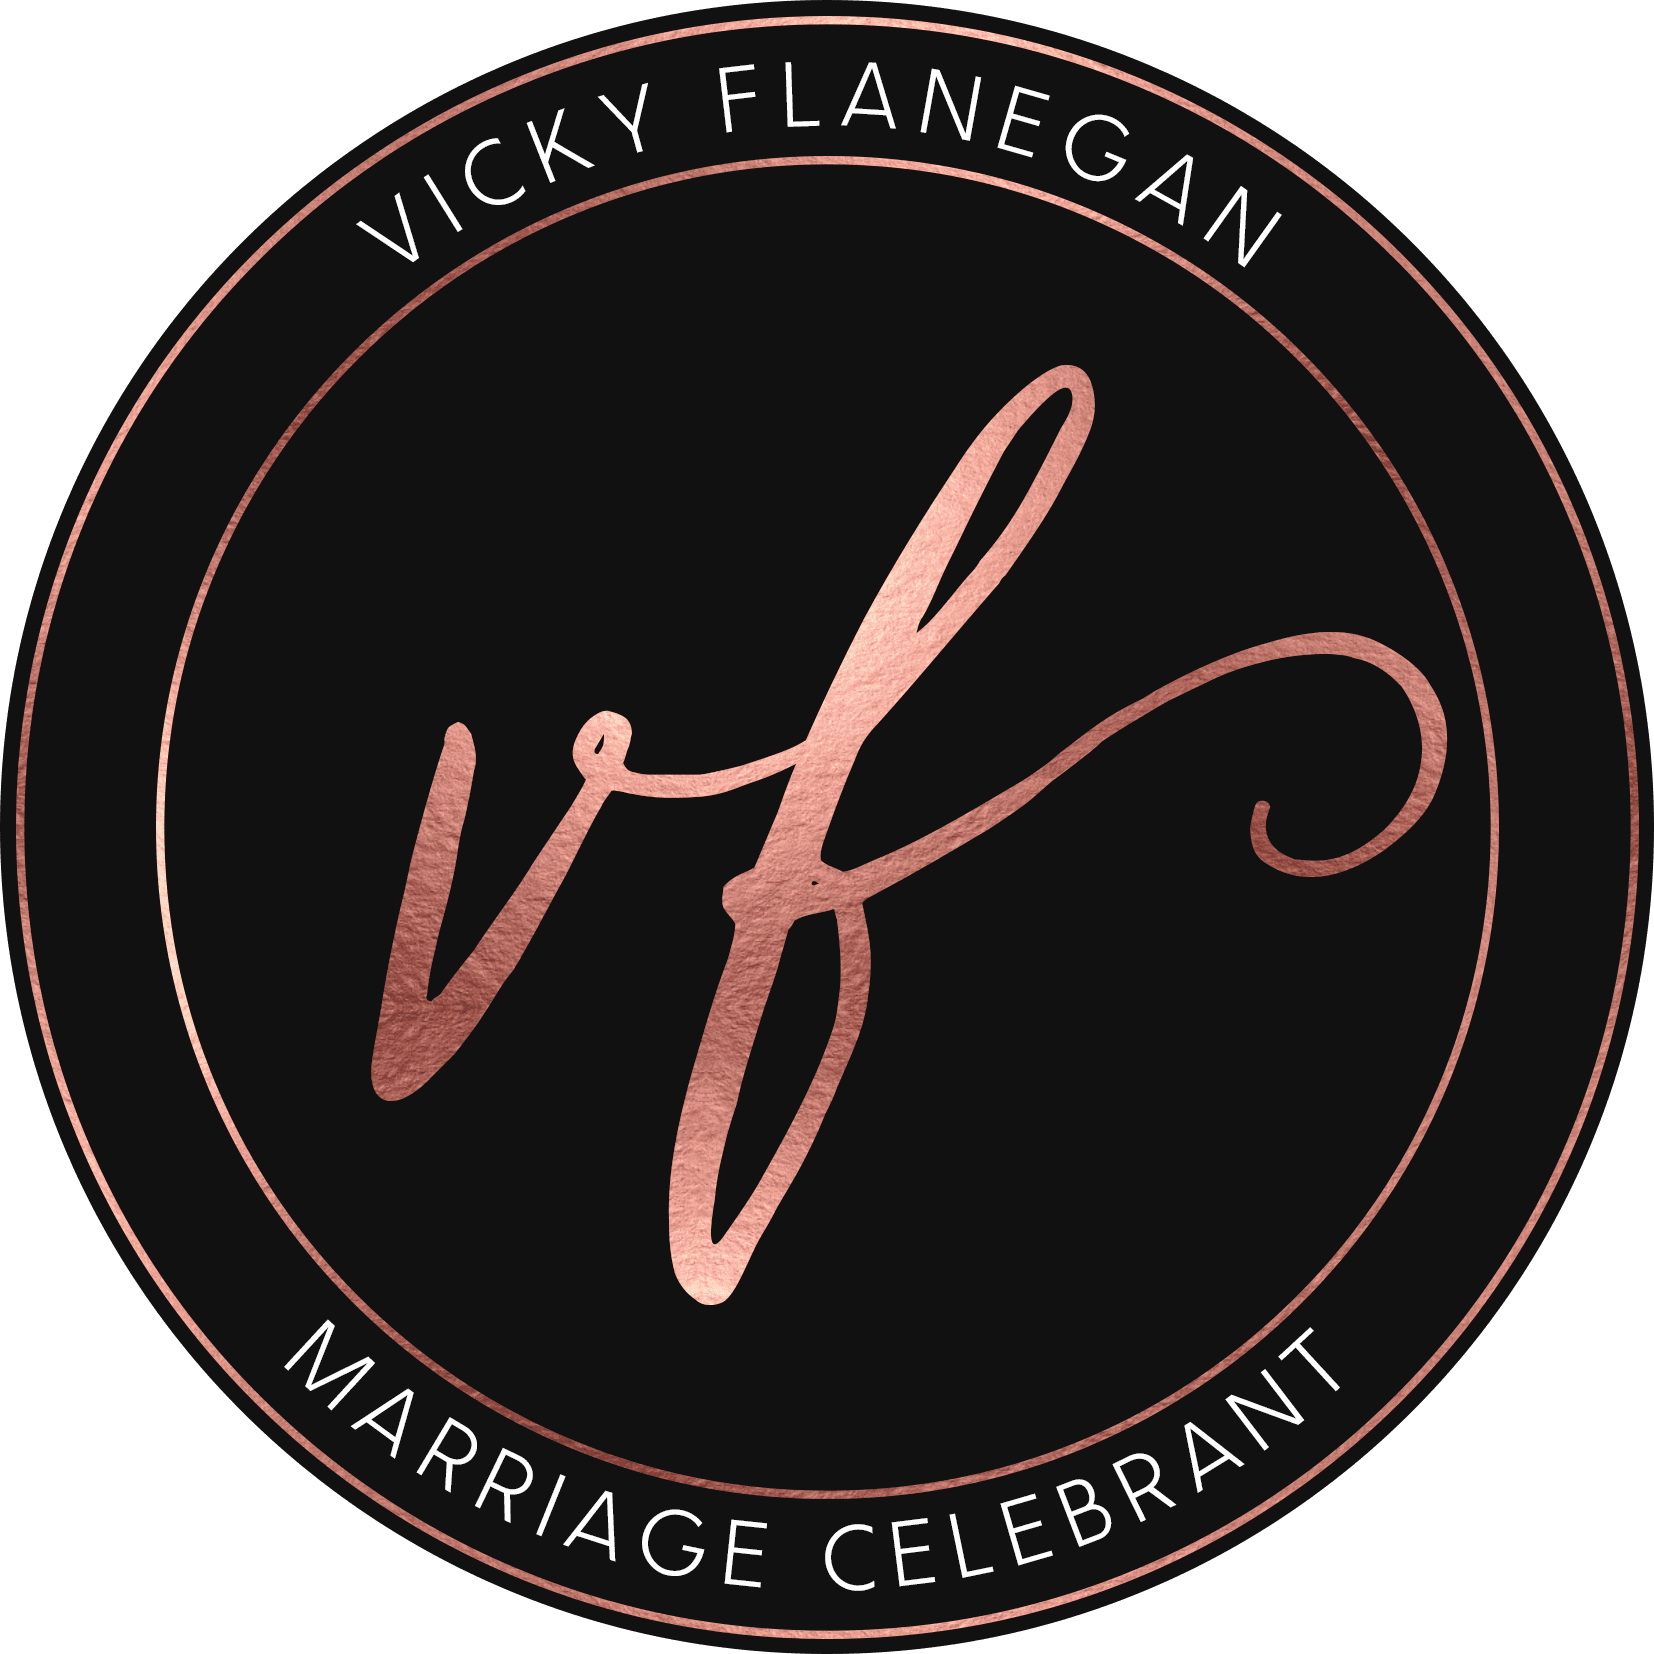 Vicky Flanegan – Marriage Celebrant